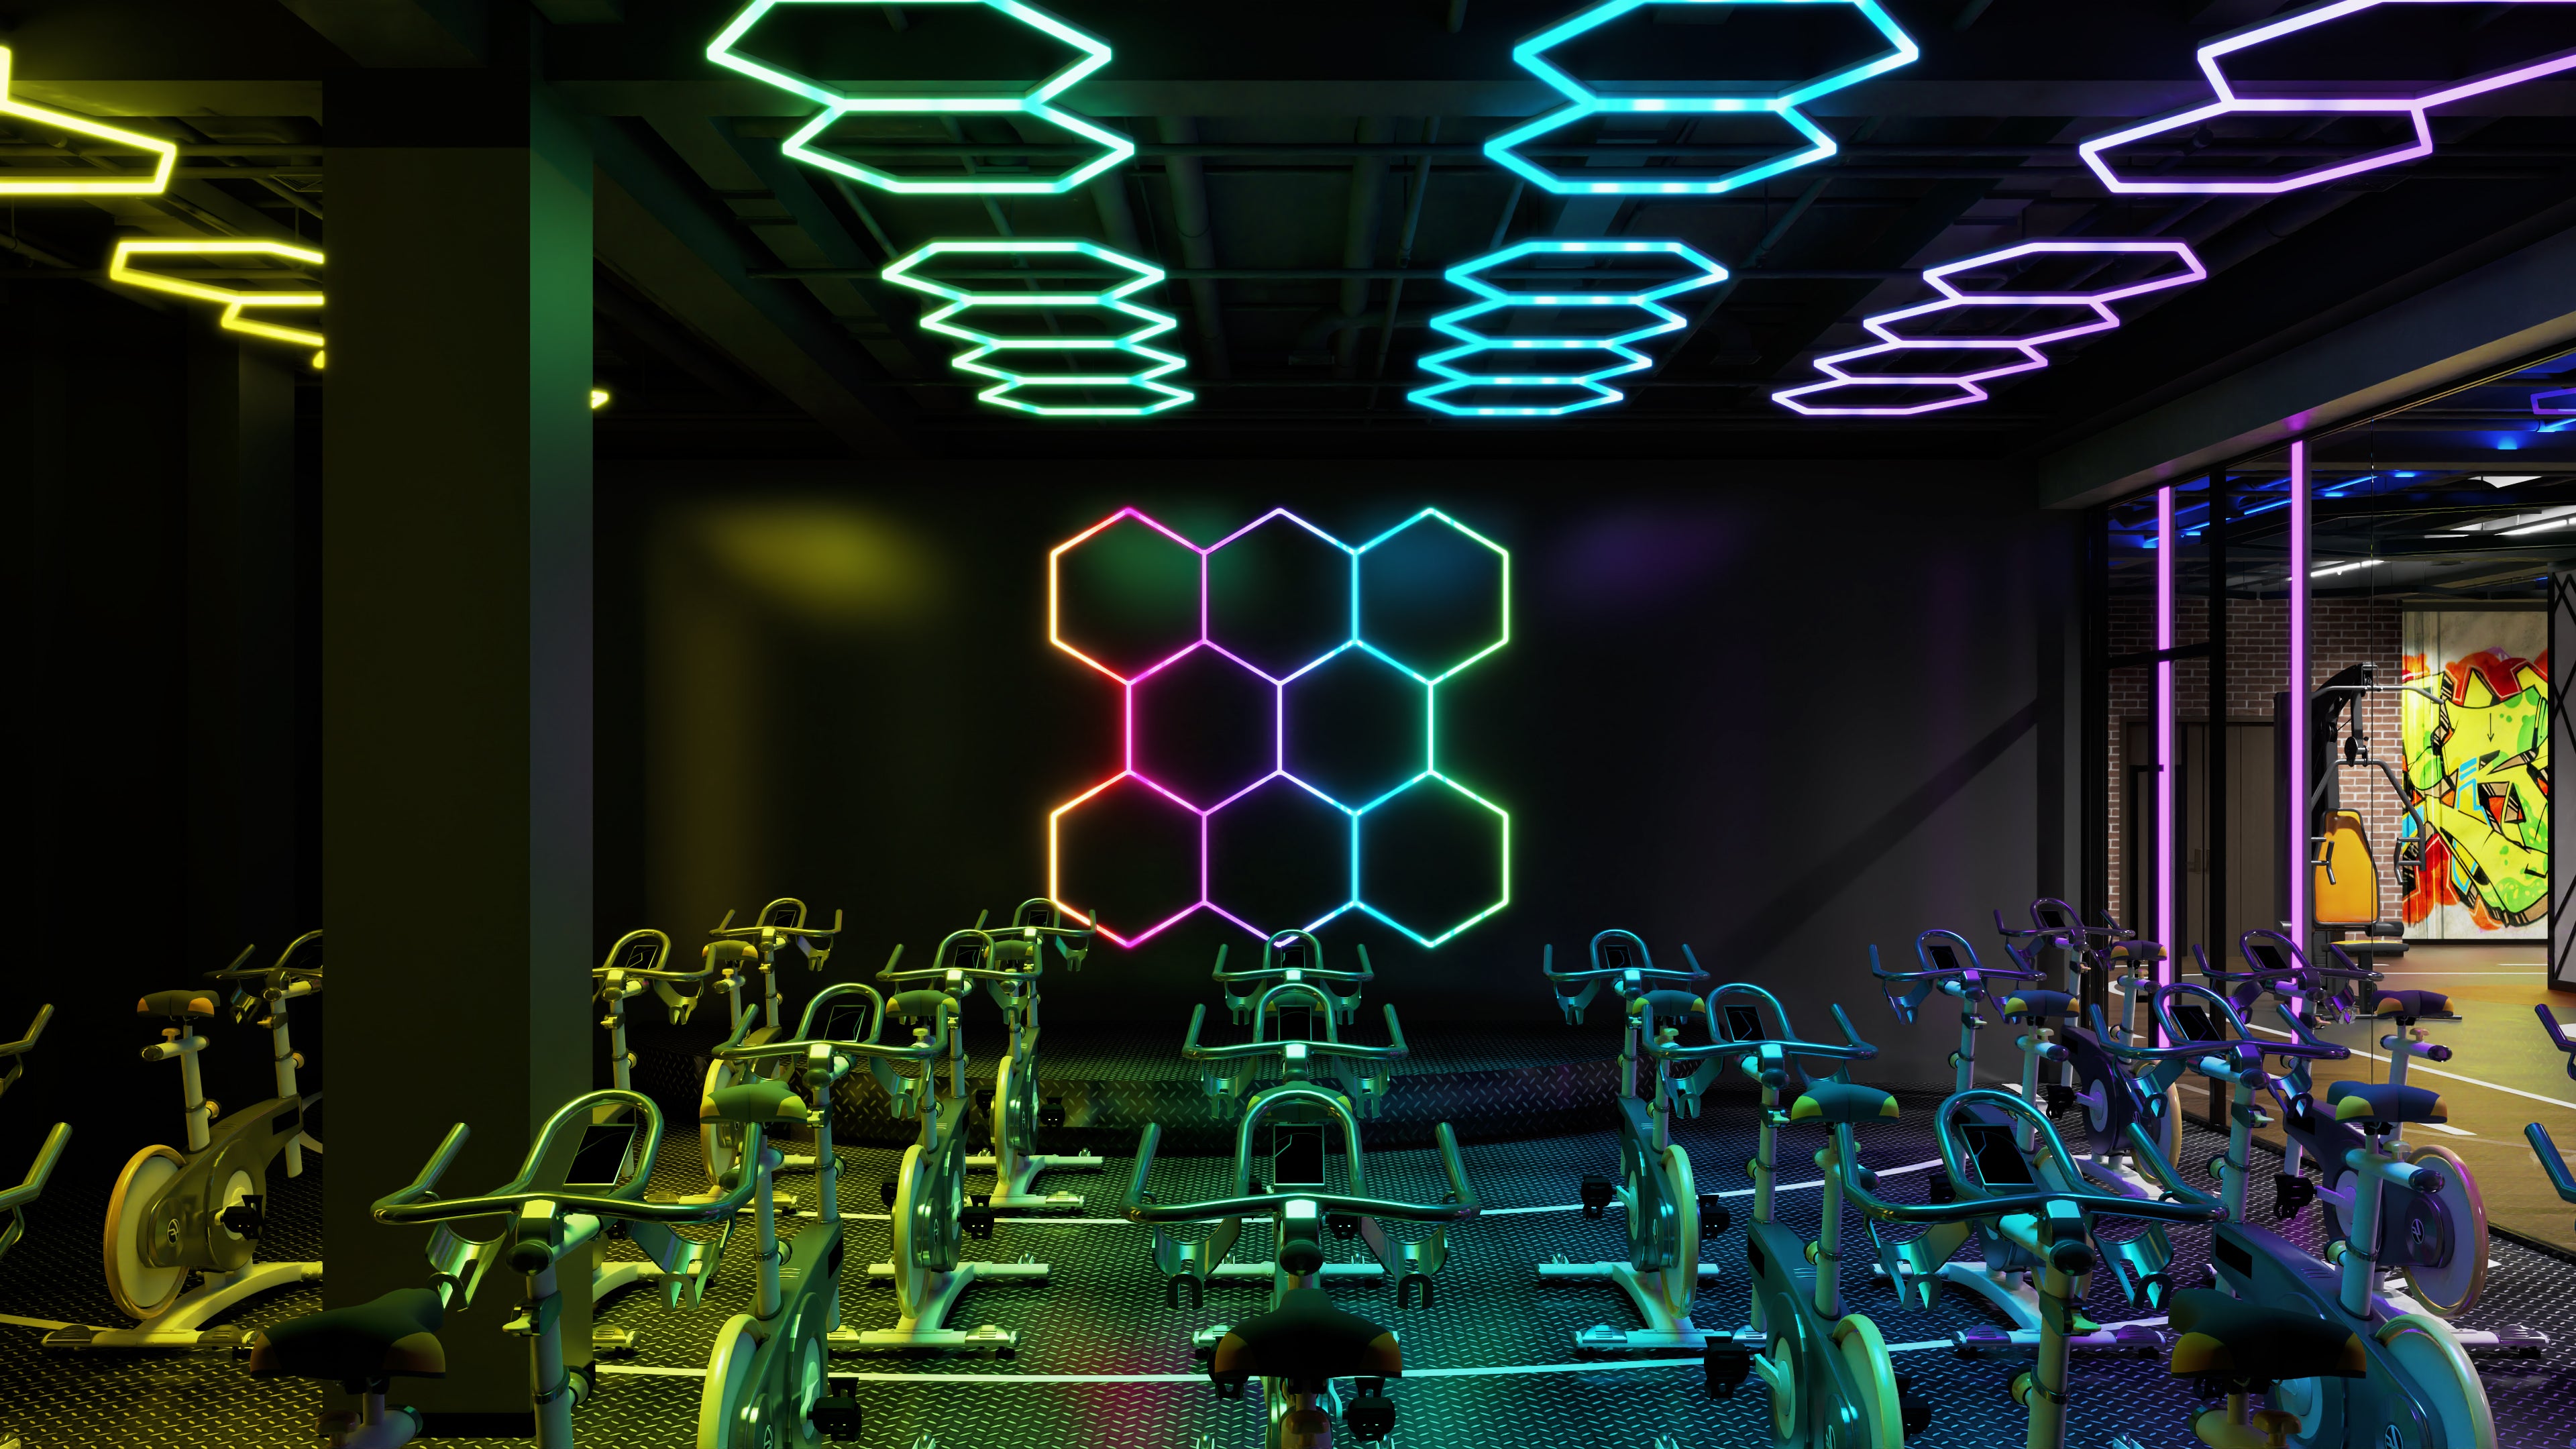 Hexagon LED Licht - RGB - 5er